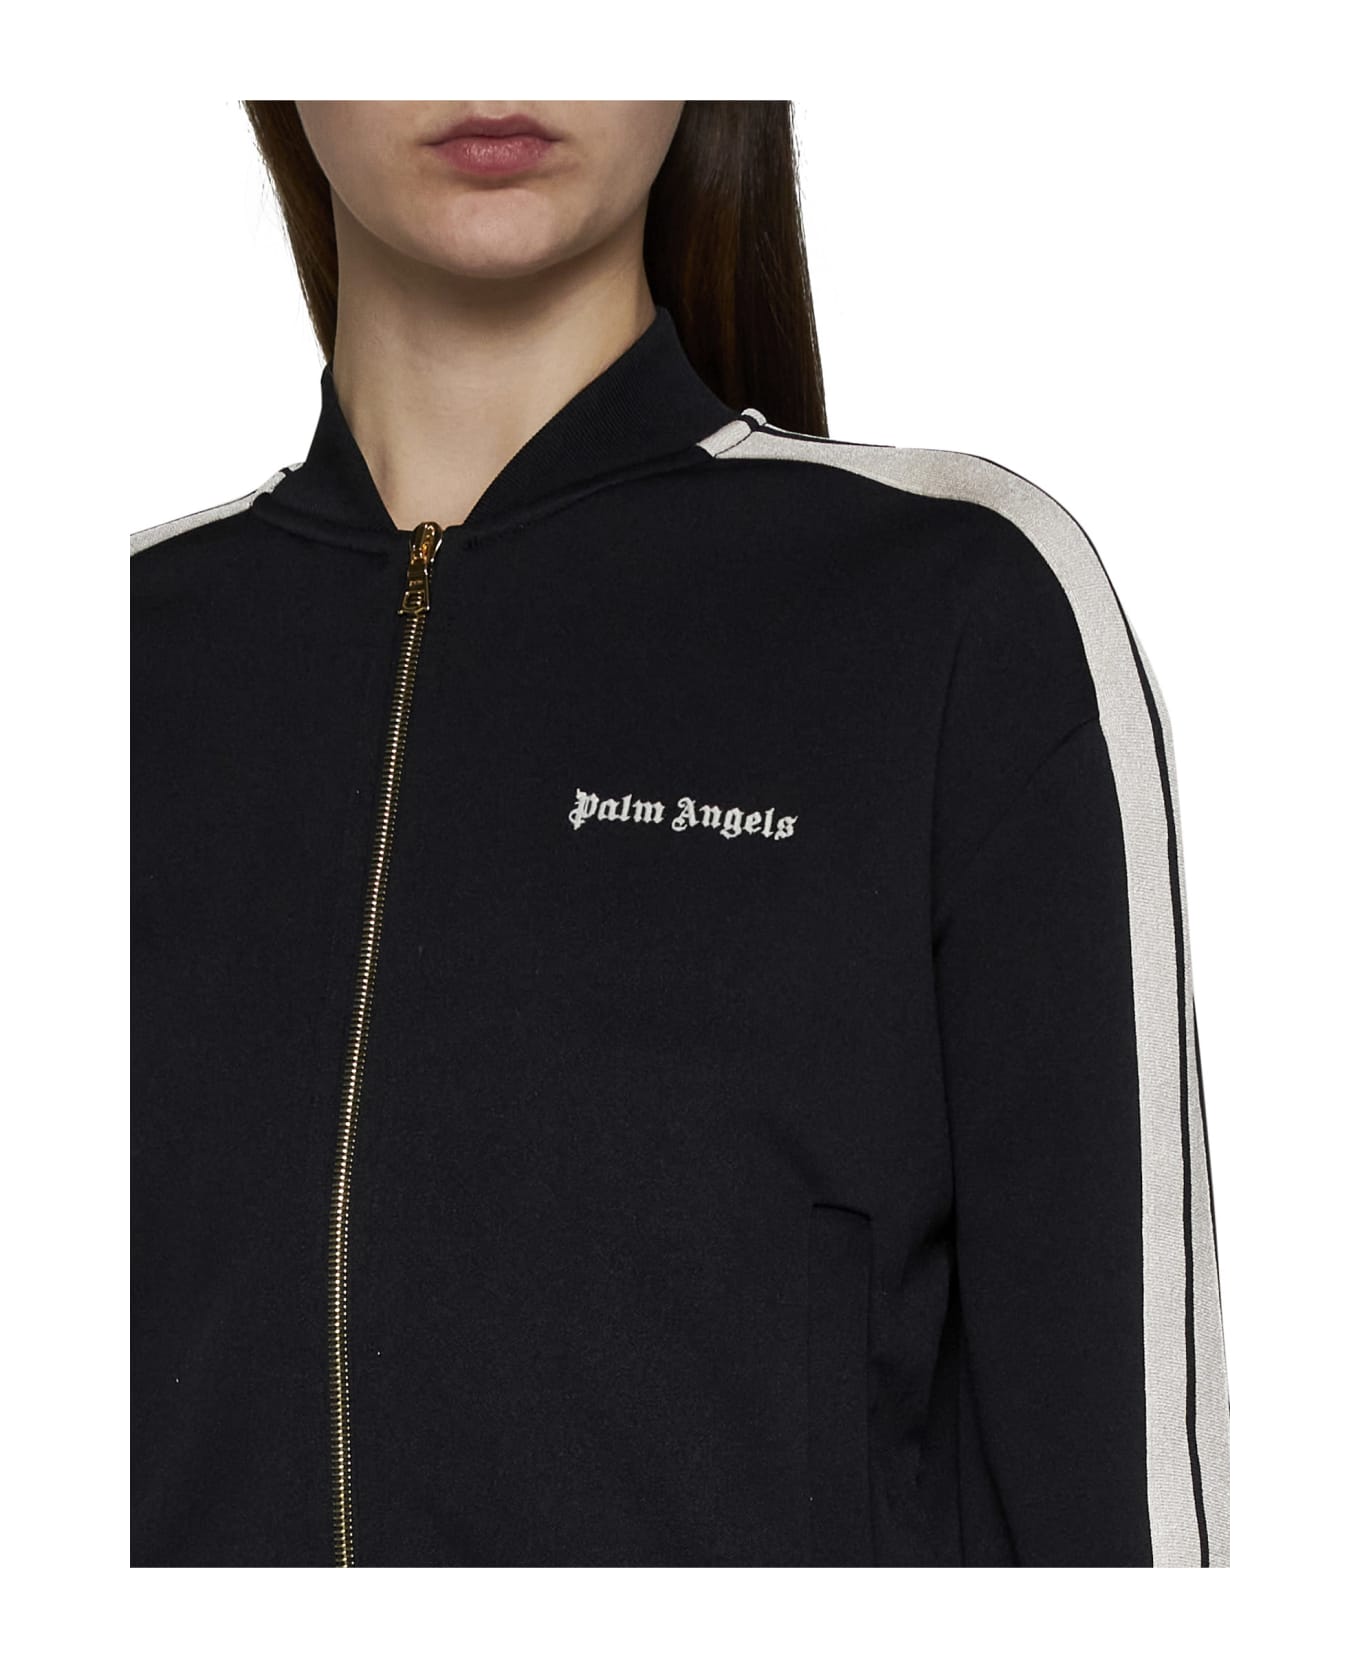 Palm Angels Sweatshirt With Logo - Black ジャケット